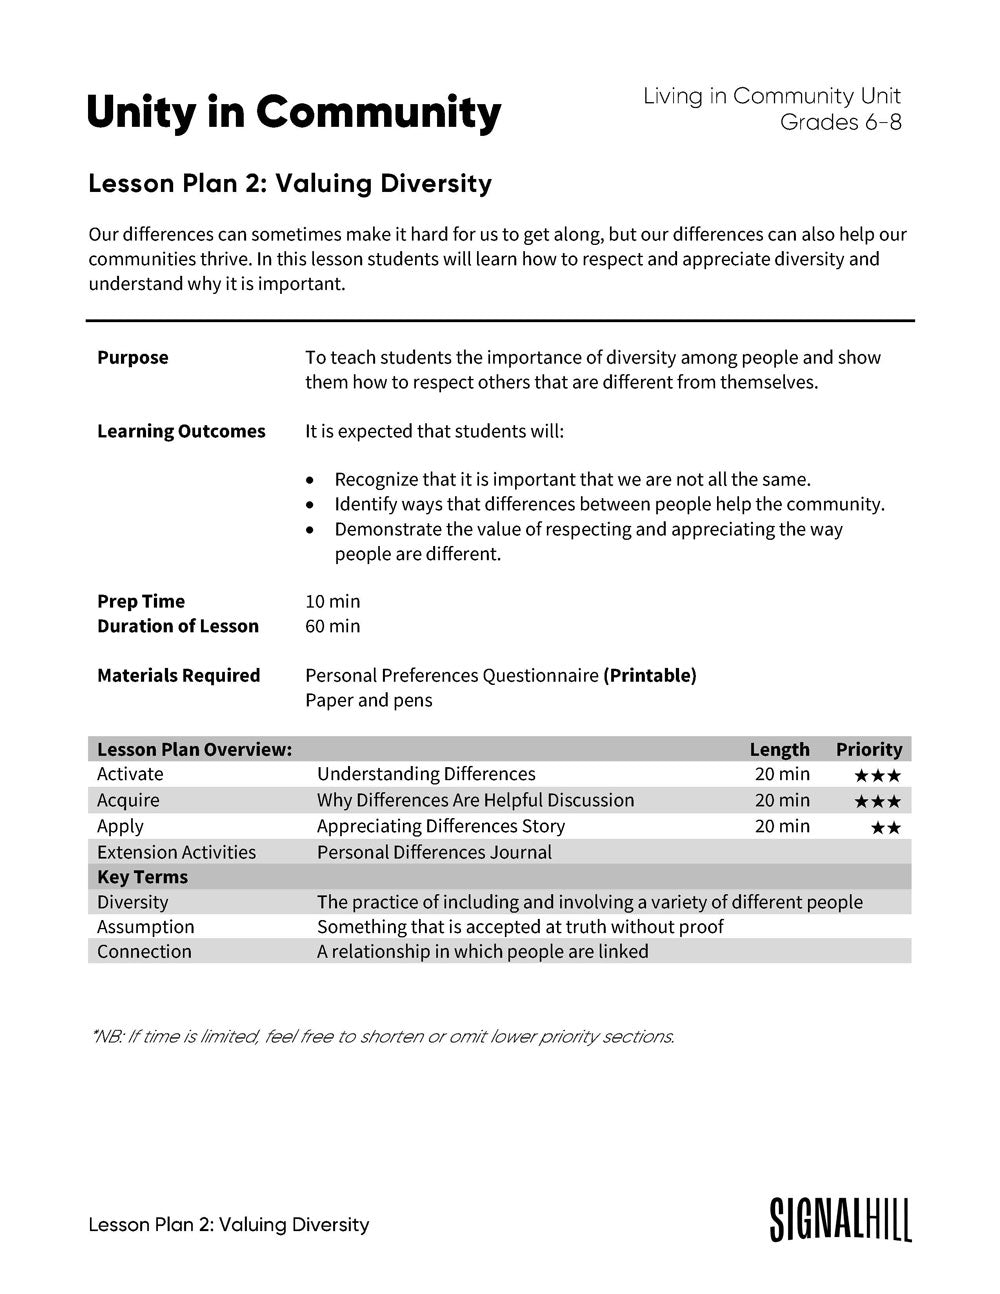 Lesson Plan 2: Valuing Diversity